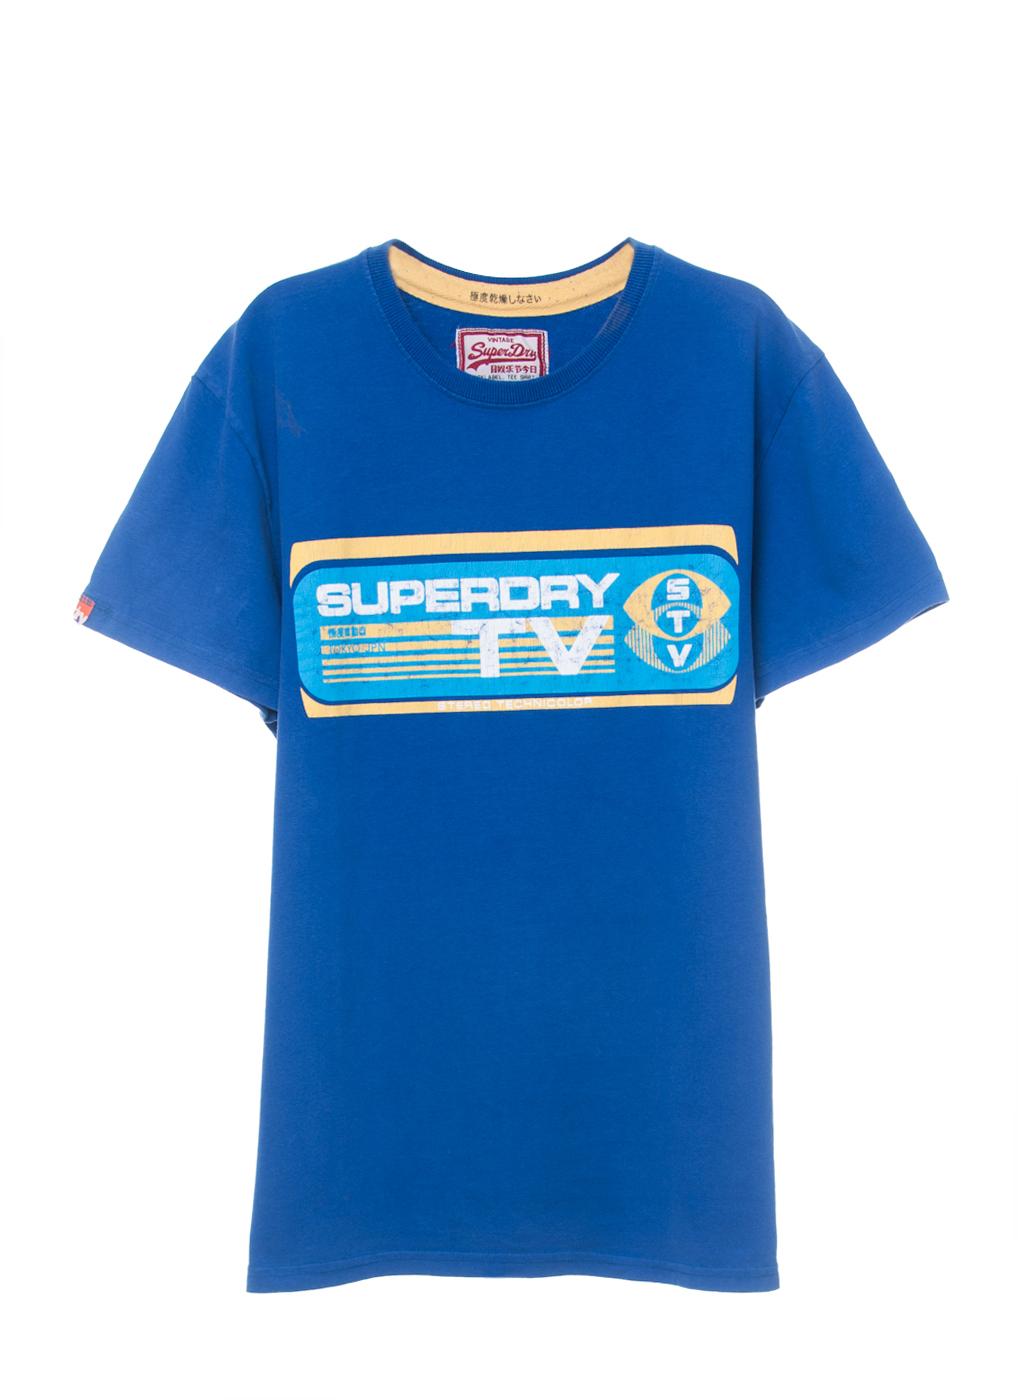 Foto Camiseta Superdry Everion